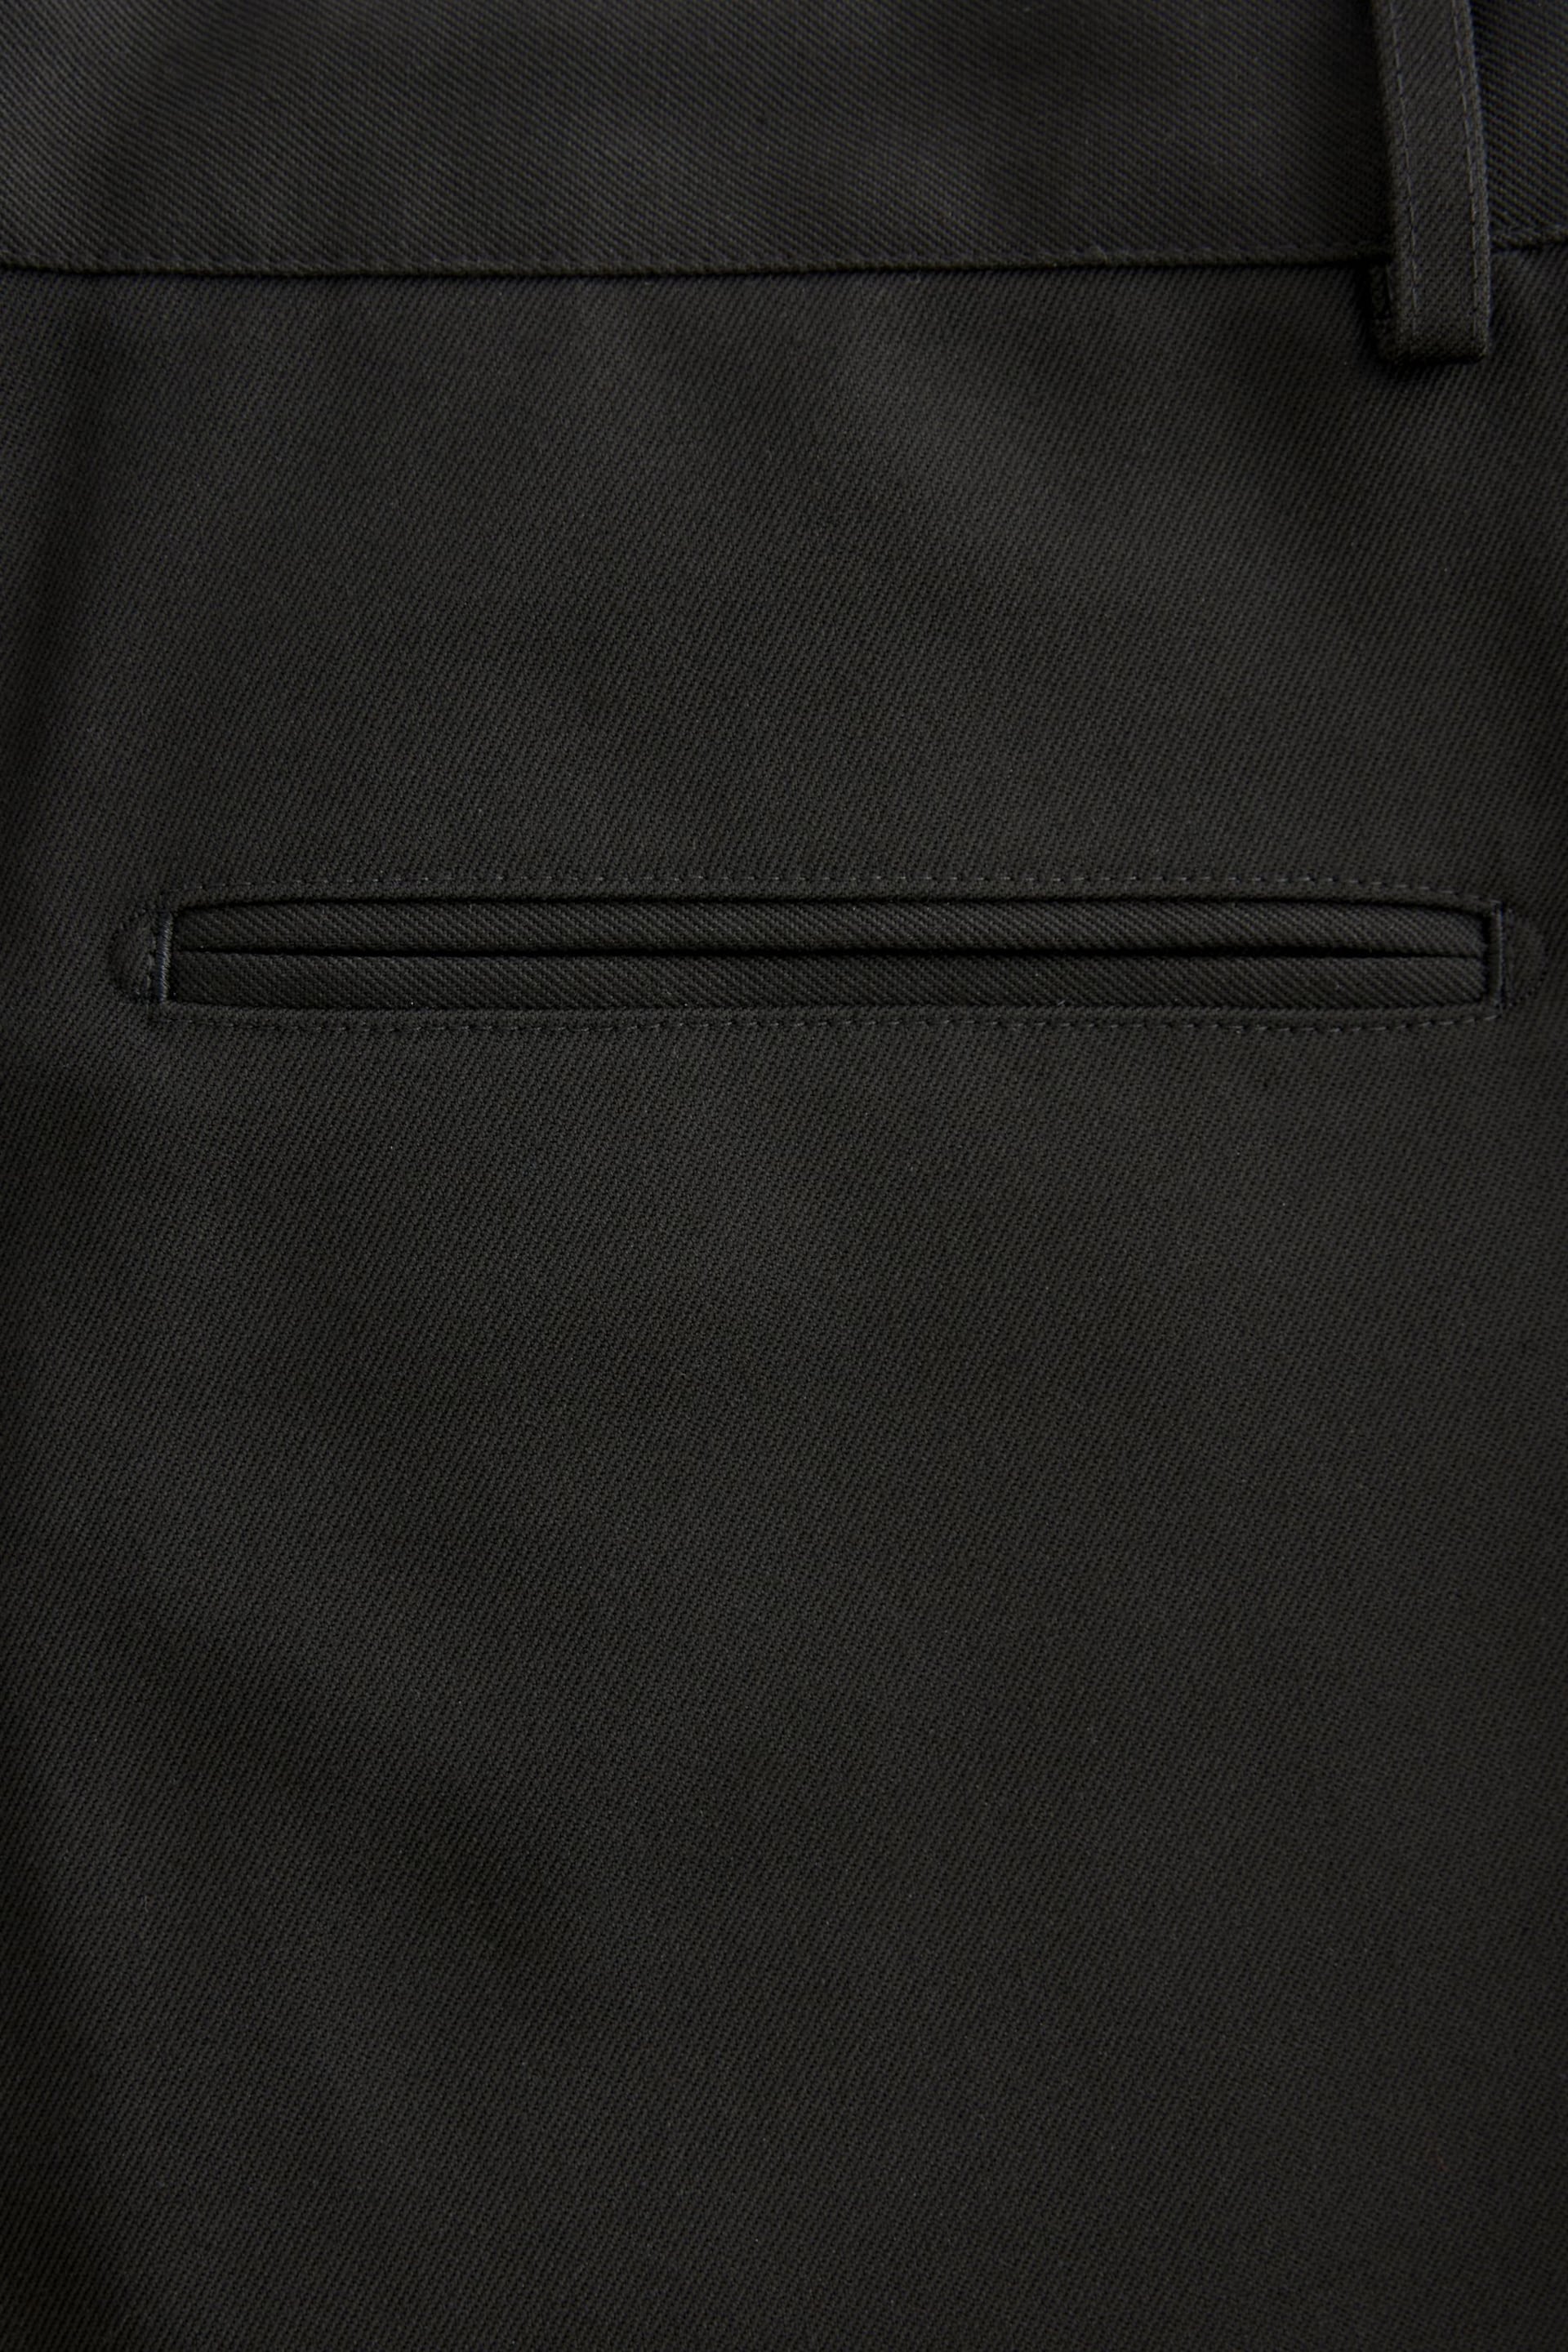 Black Plain Front Smart Trousers - Image 8 of 8